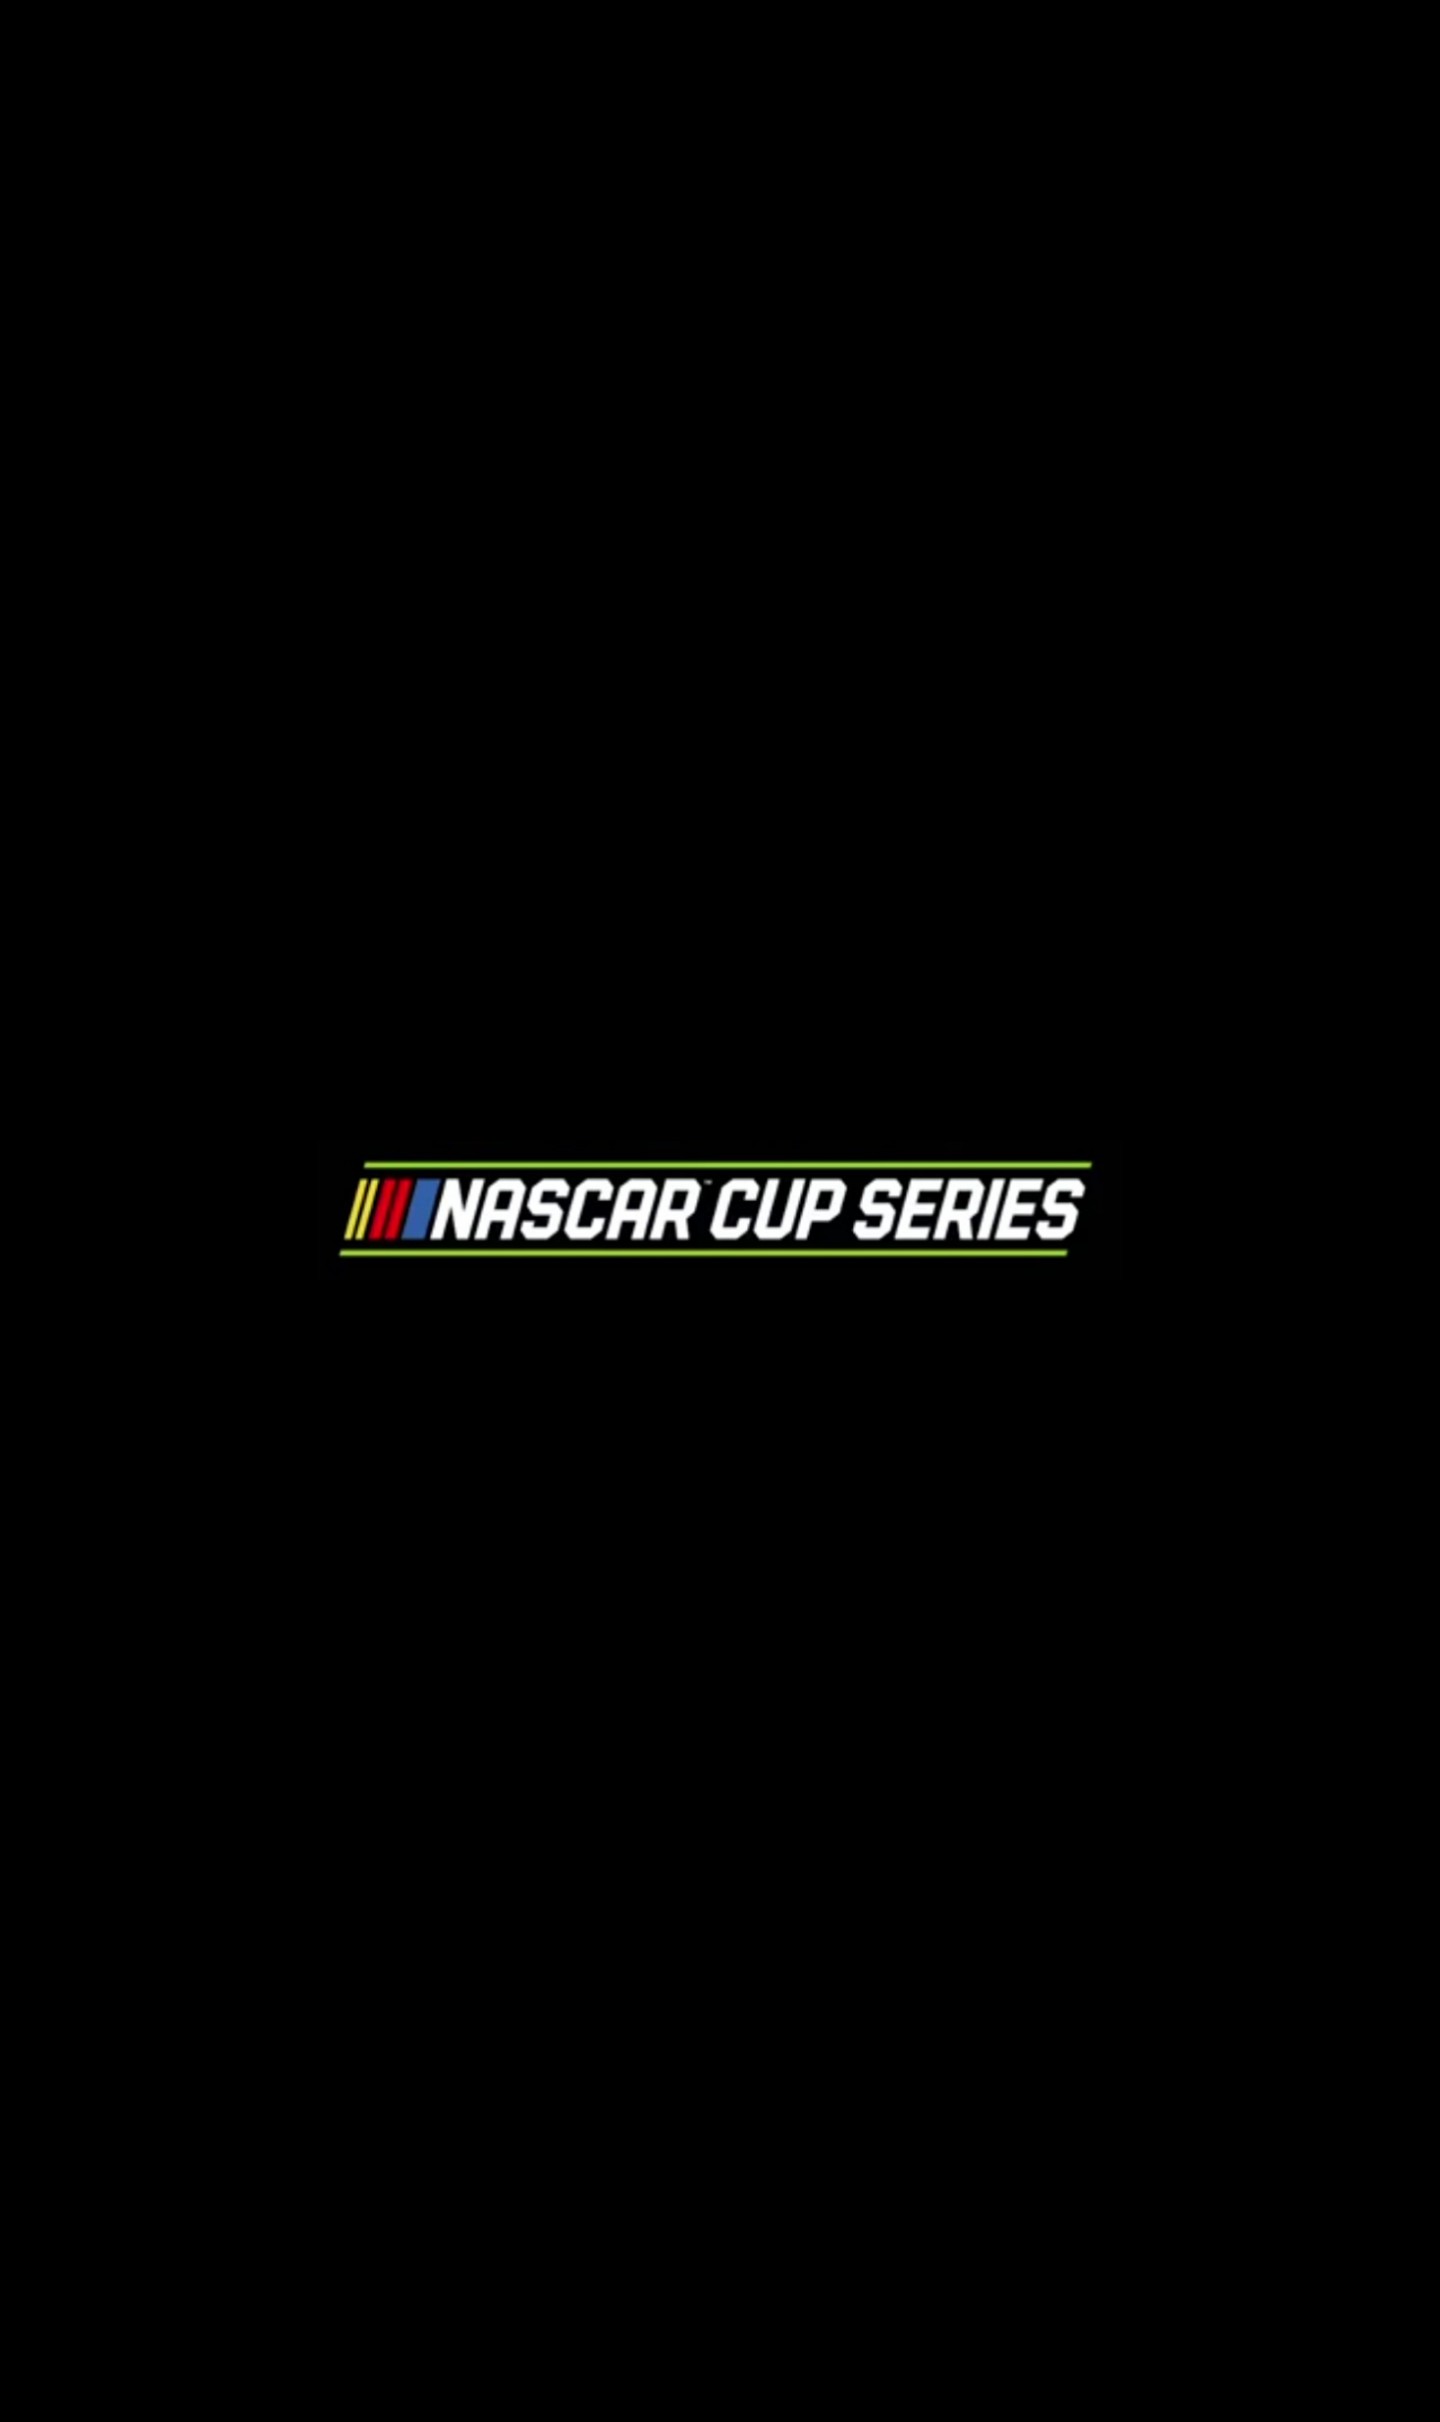 New NASCAR logo phone wallpaper